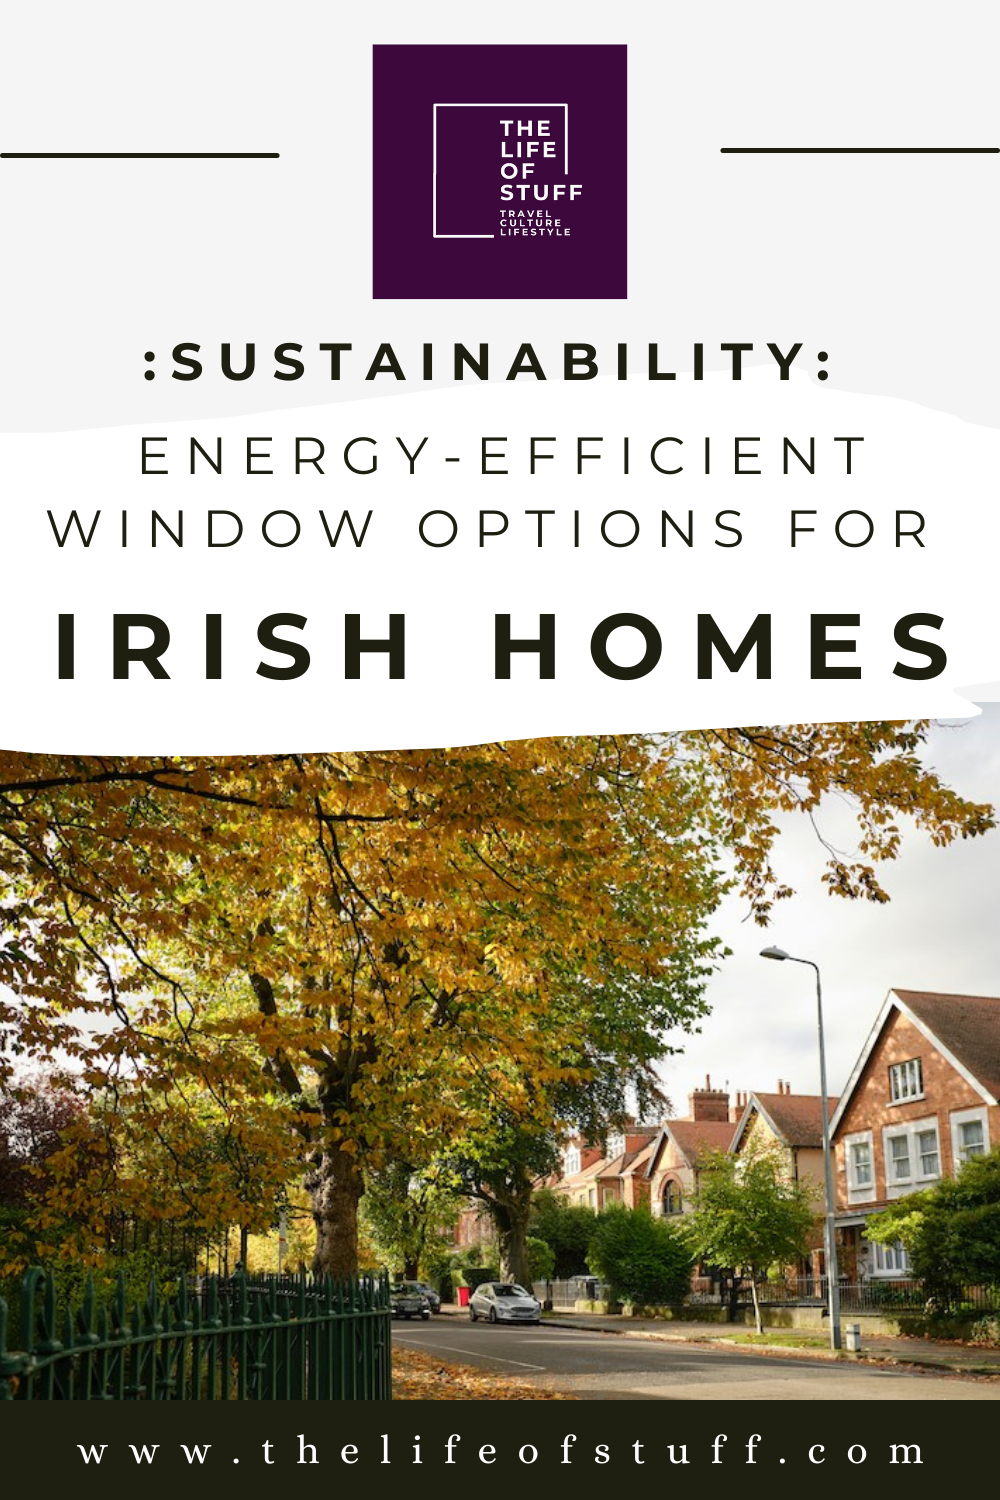 Energy-Efficient Window Options for Irish Houses - The Life of Stuff